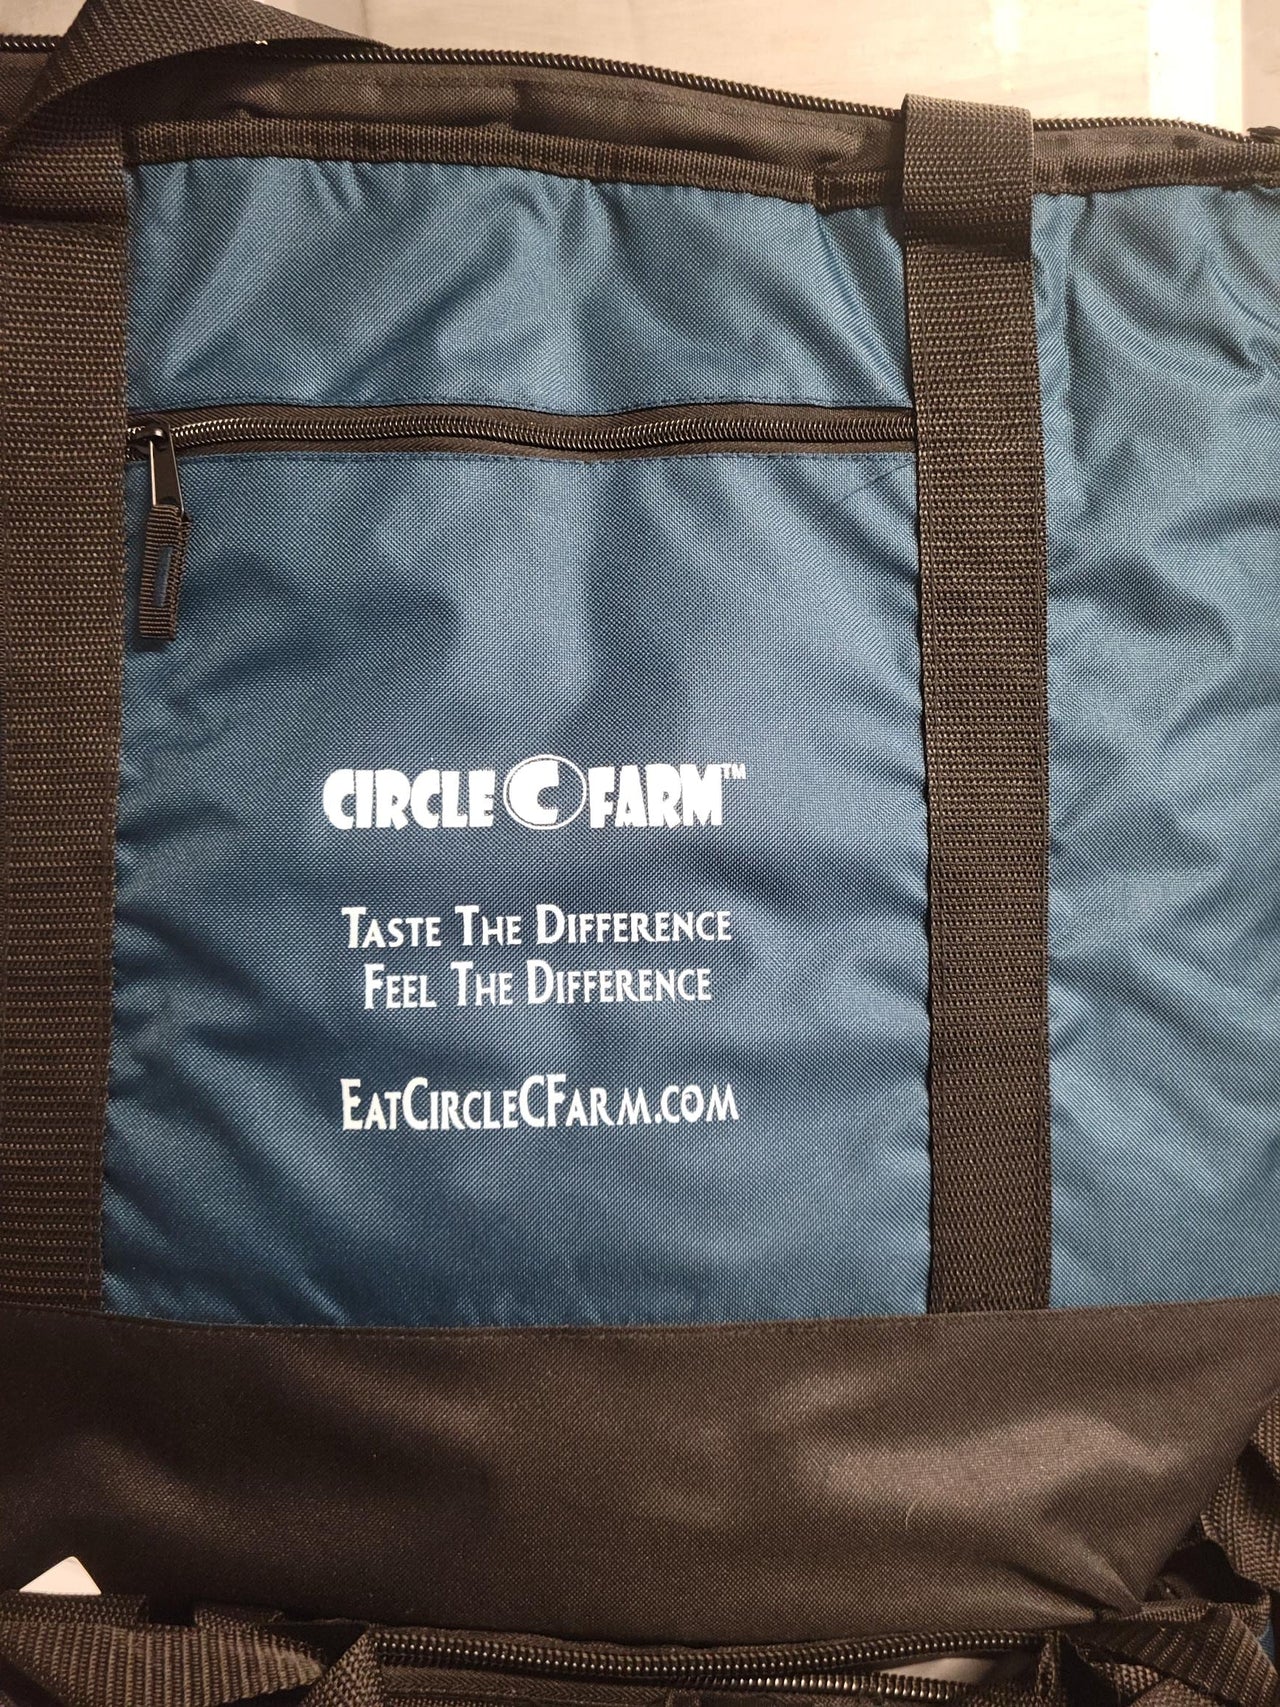 Circle C Farm Insulated Cooler Bag Swag / Merchandise